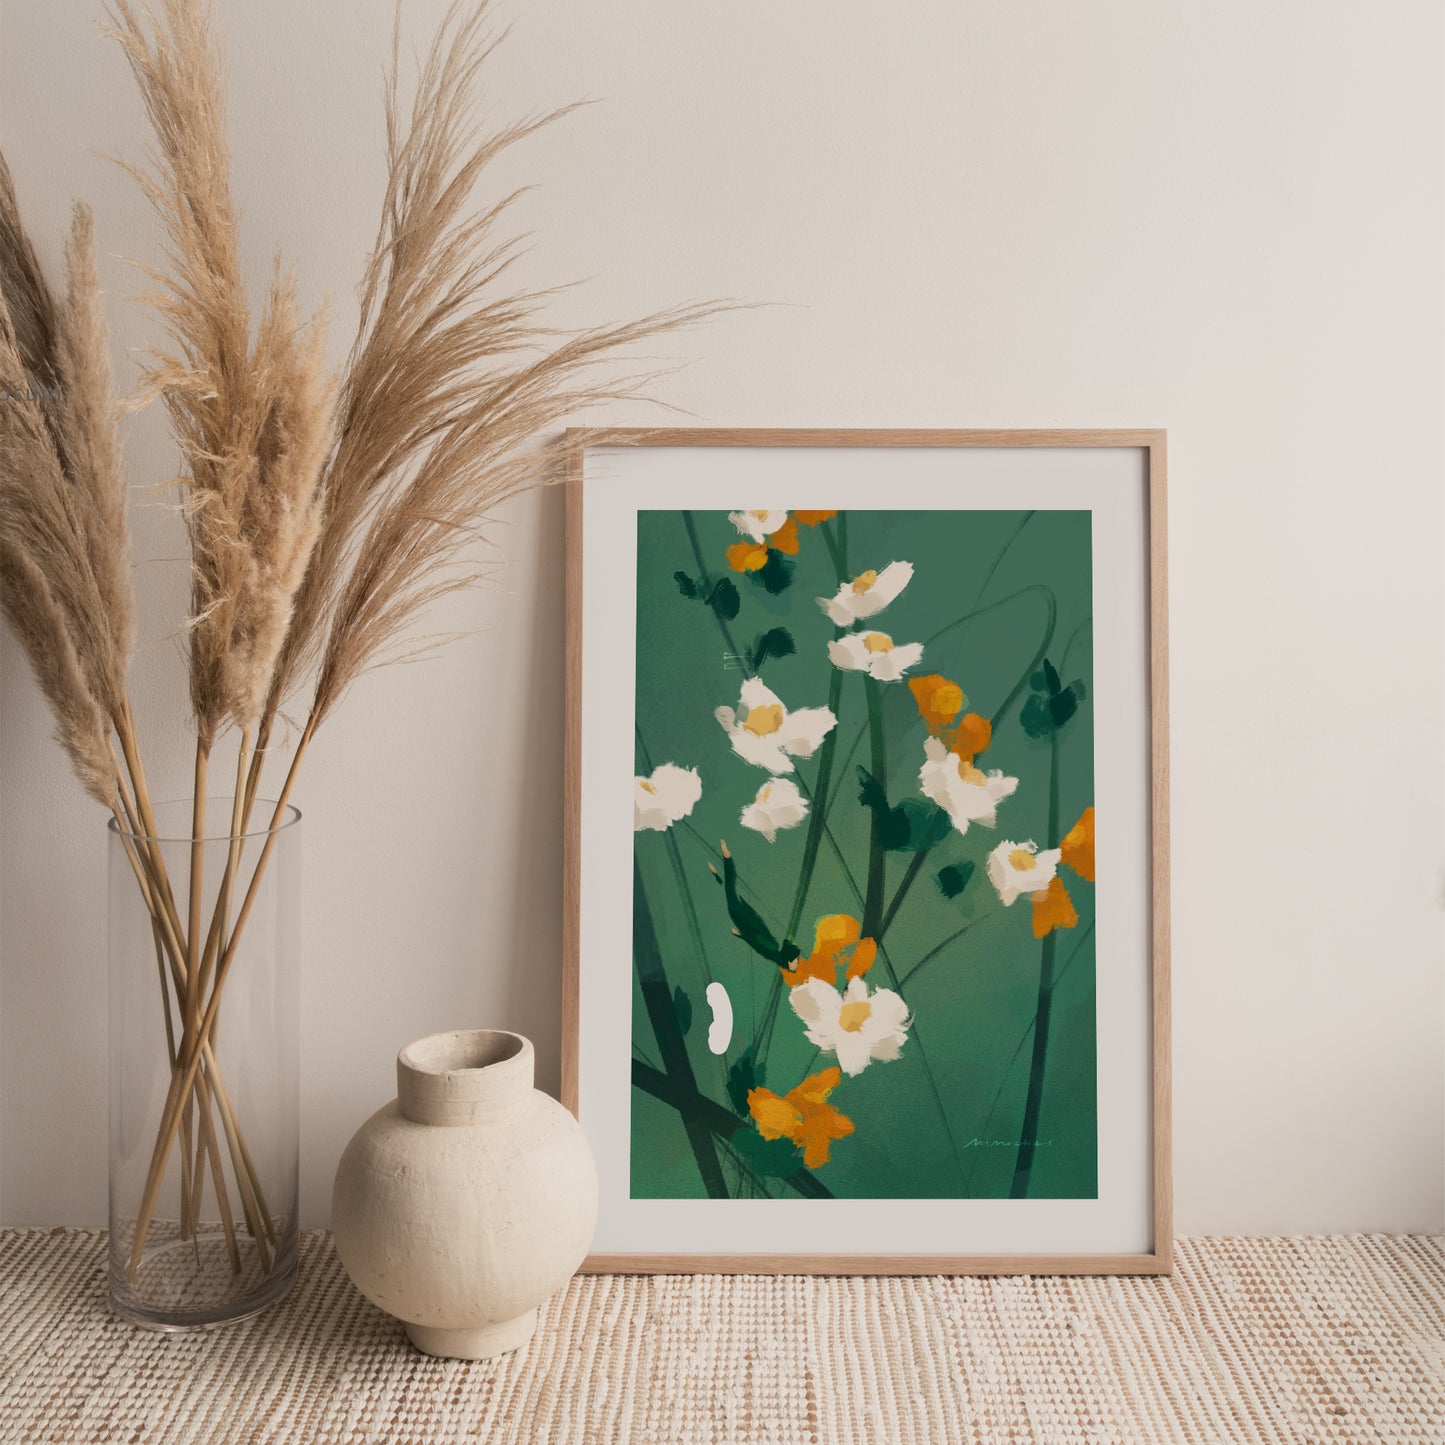 Finding Wildflowers | Framed Wall Art